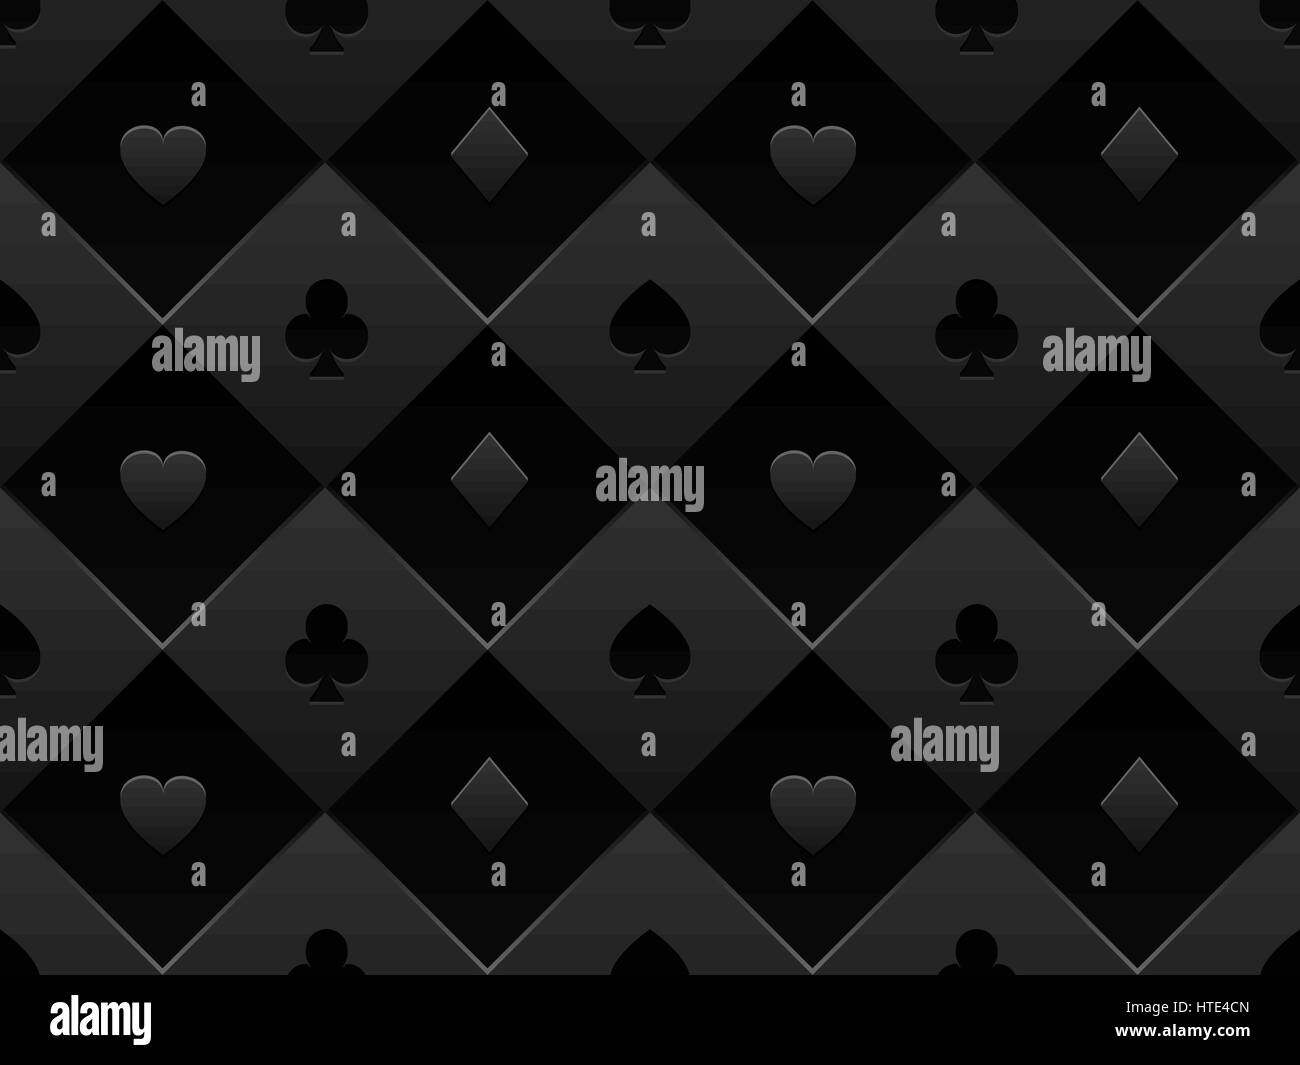 Cartas de poker y fondo negro Stock Illustration